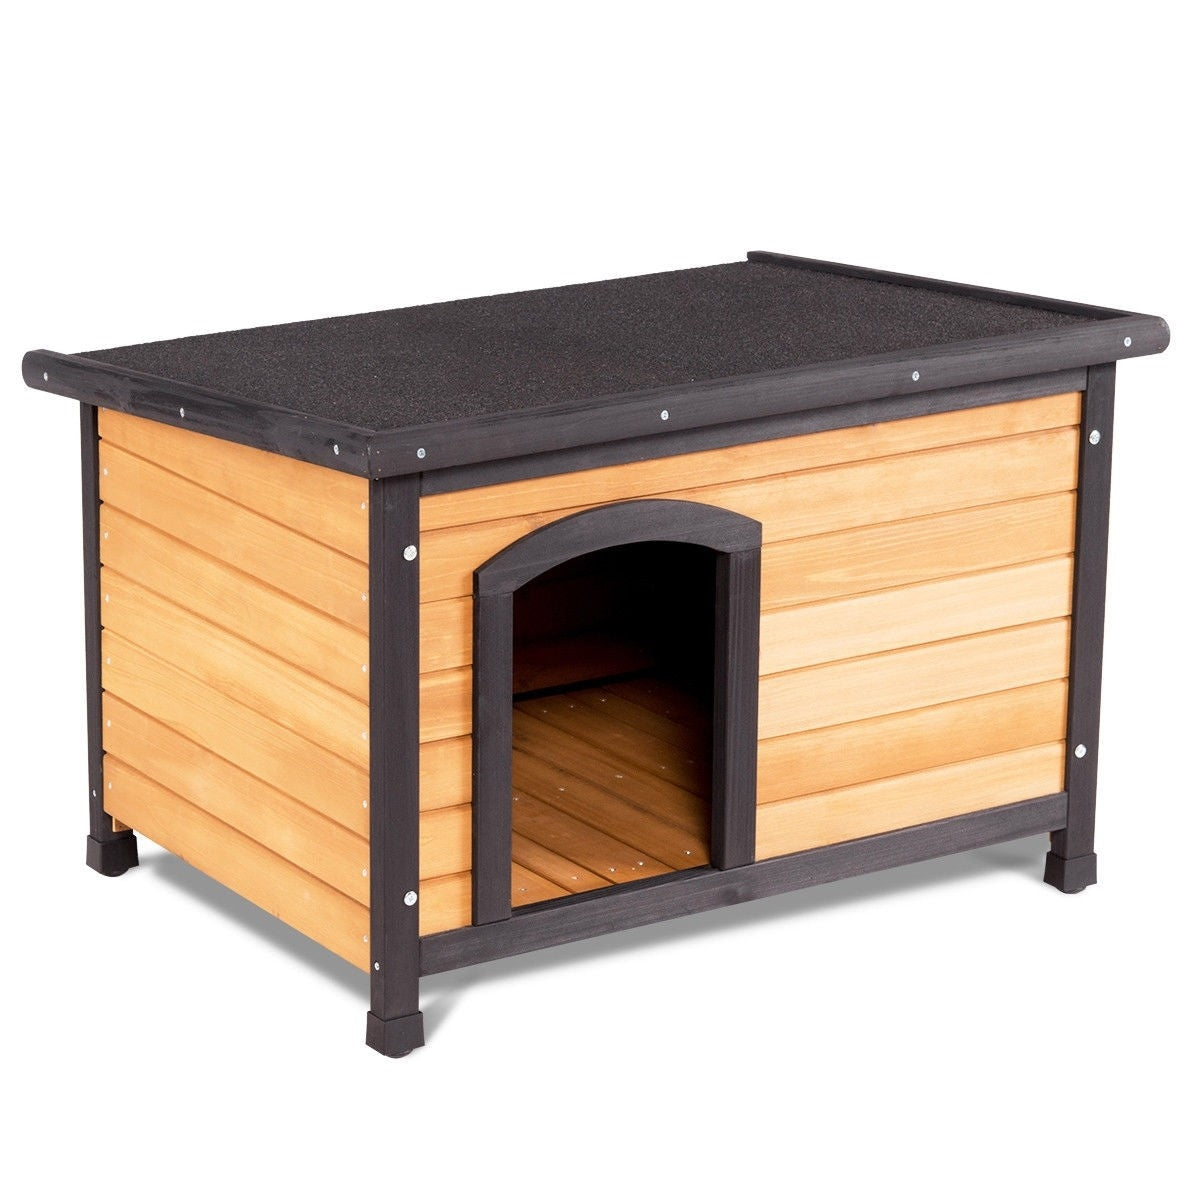 Medium Fir Wood Log Cabin Style Outdoor Dog House